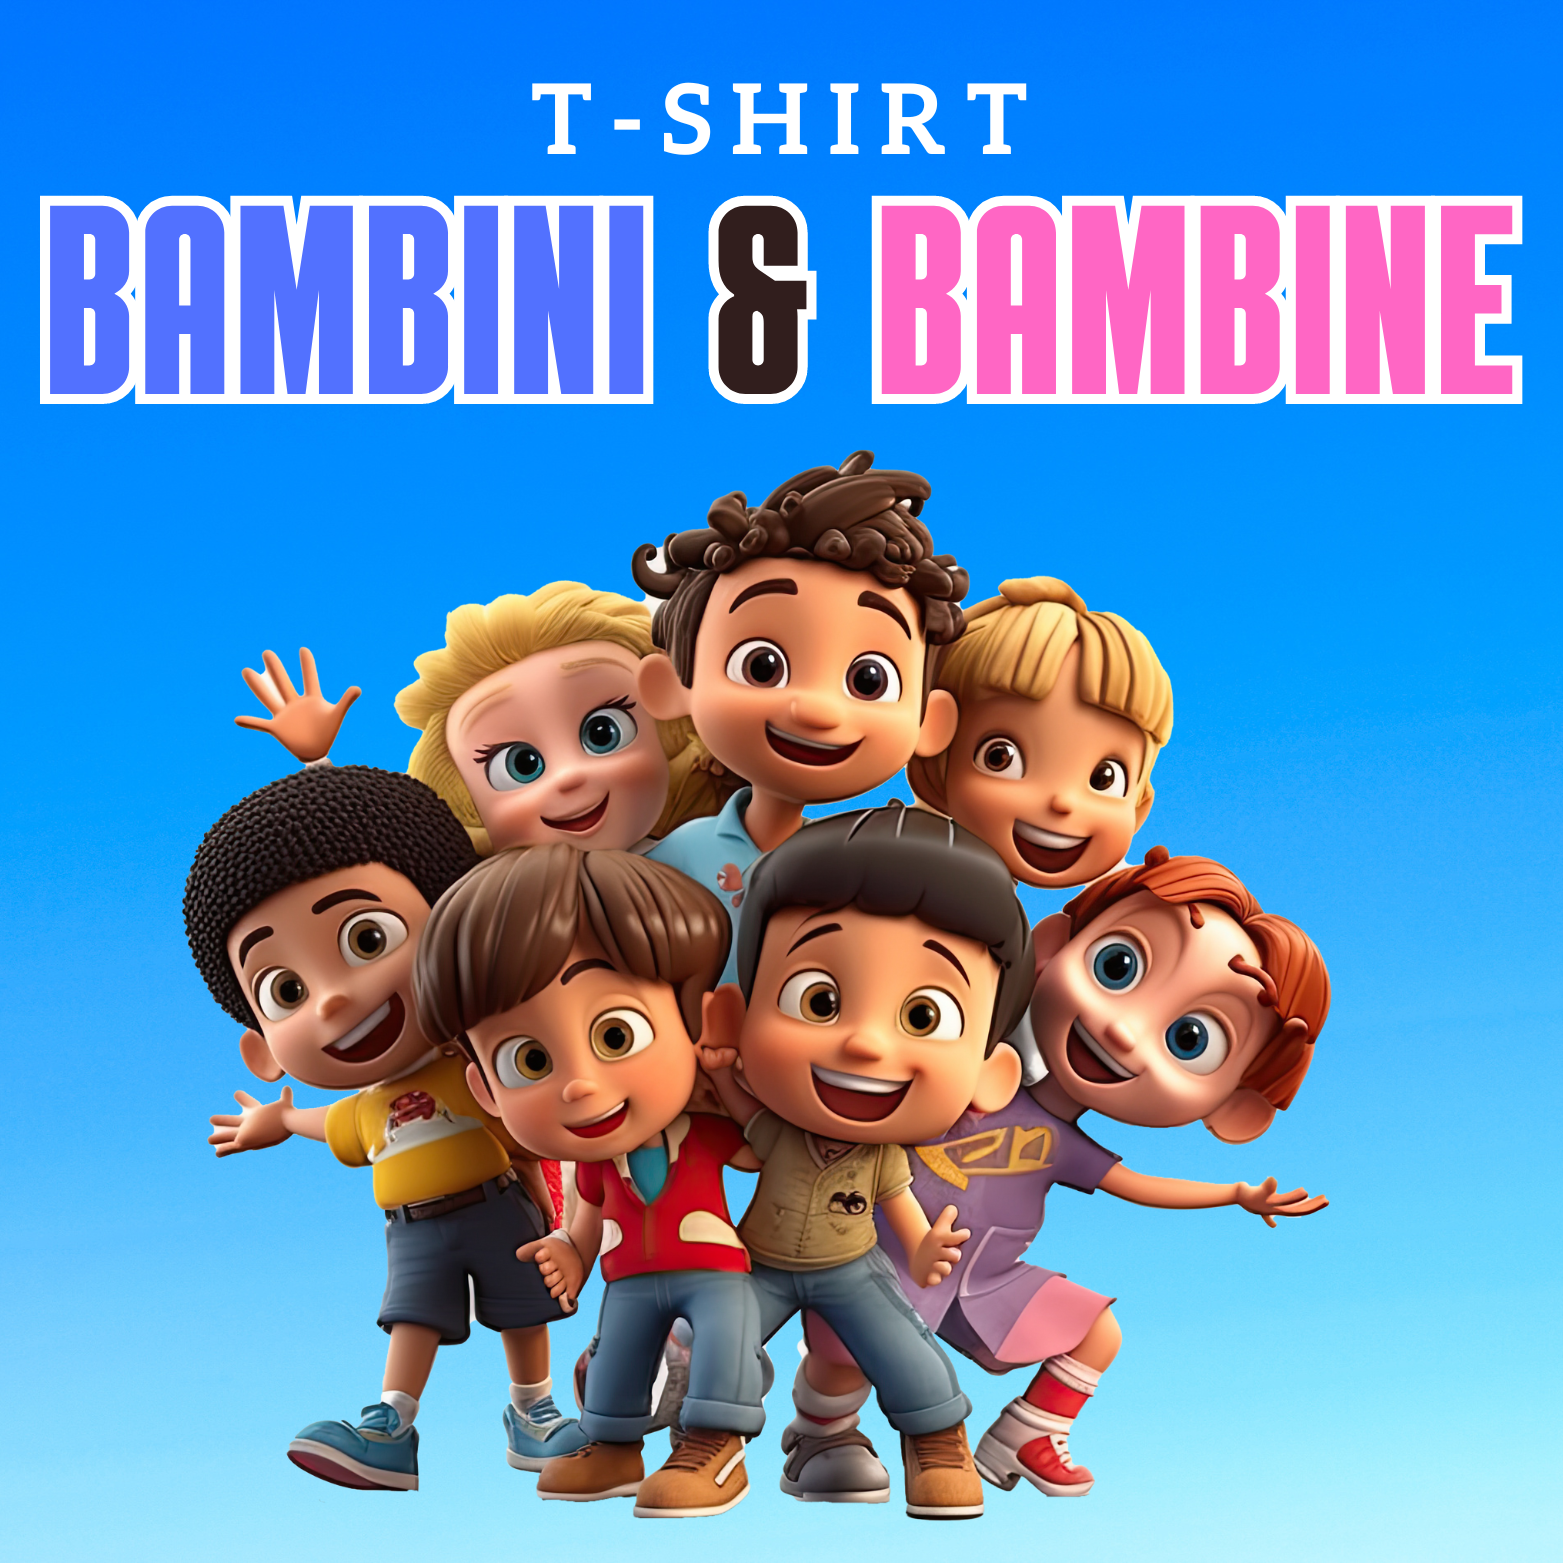 T-SHIRT BAMBINI & BAMBINE